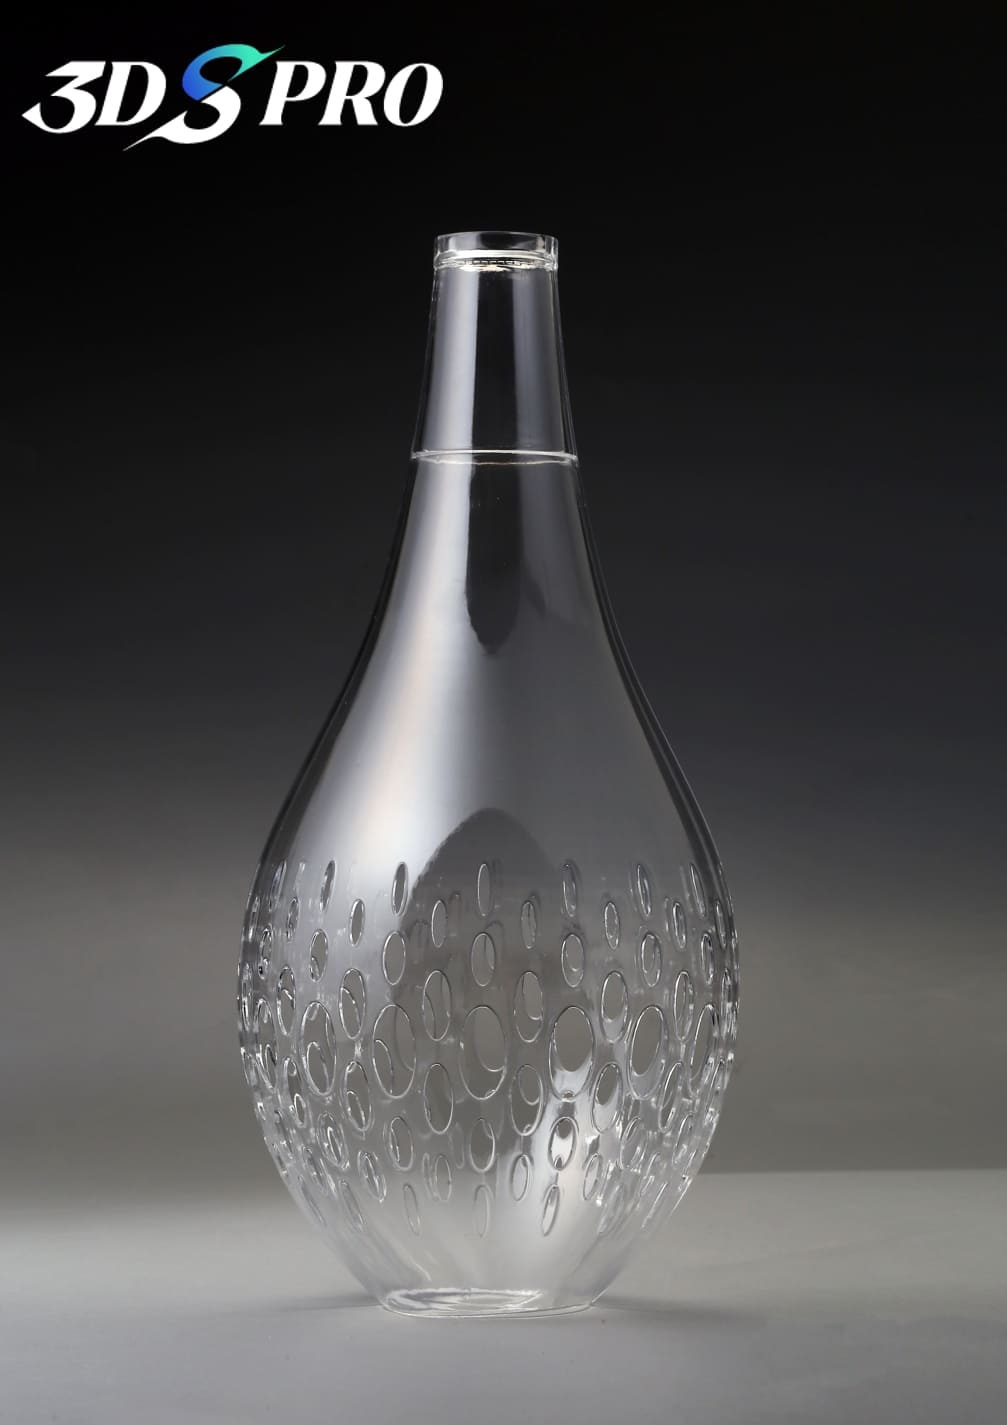 3DSPRO SLA Printed Vase